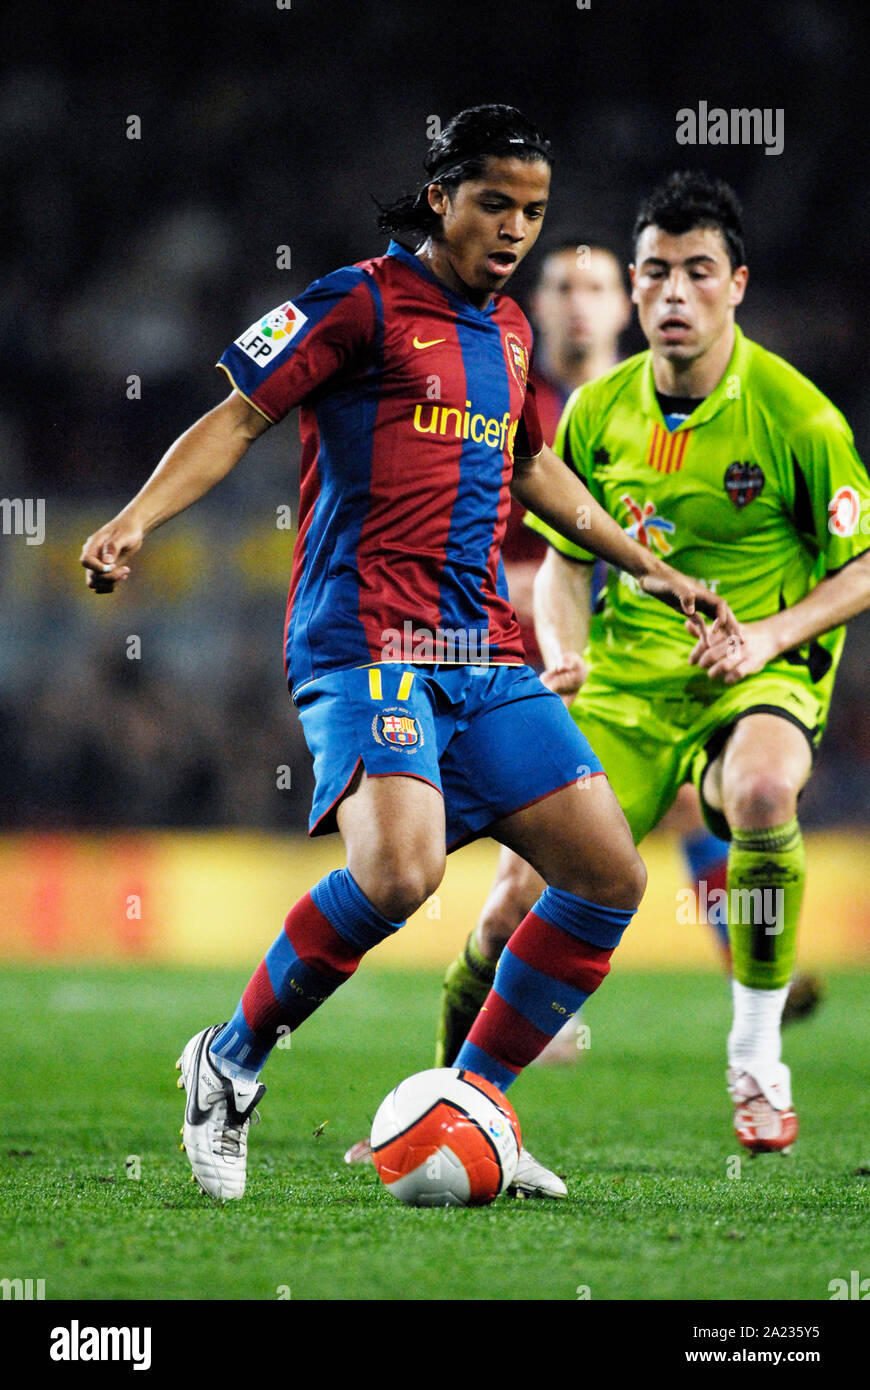 Estadio Camp Nou Barcelona Spain, 24.02.2008 Football: Spanish Primera Division, FC Barcelona (BCN) vs UD Levante (LVN) 5:1,  GIOVANI Dos Santos (BCN) Stock Photo